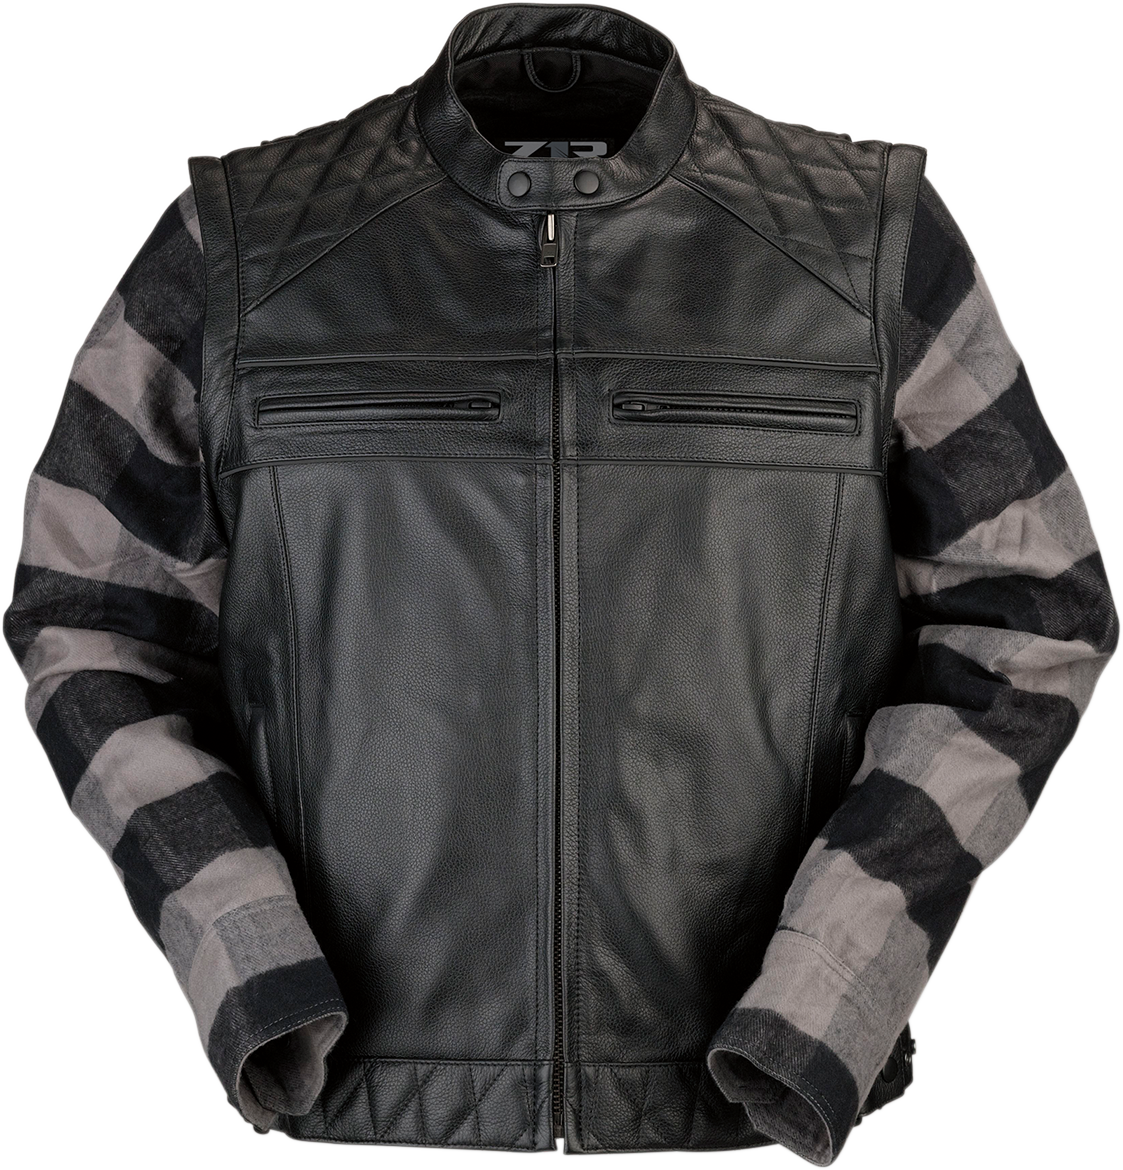 Z1R Ordinance 3 In 1 Jacket - Black - XL 2810-3570